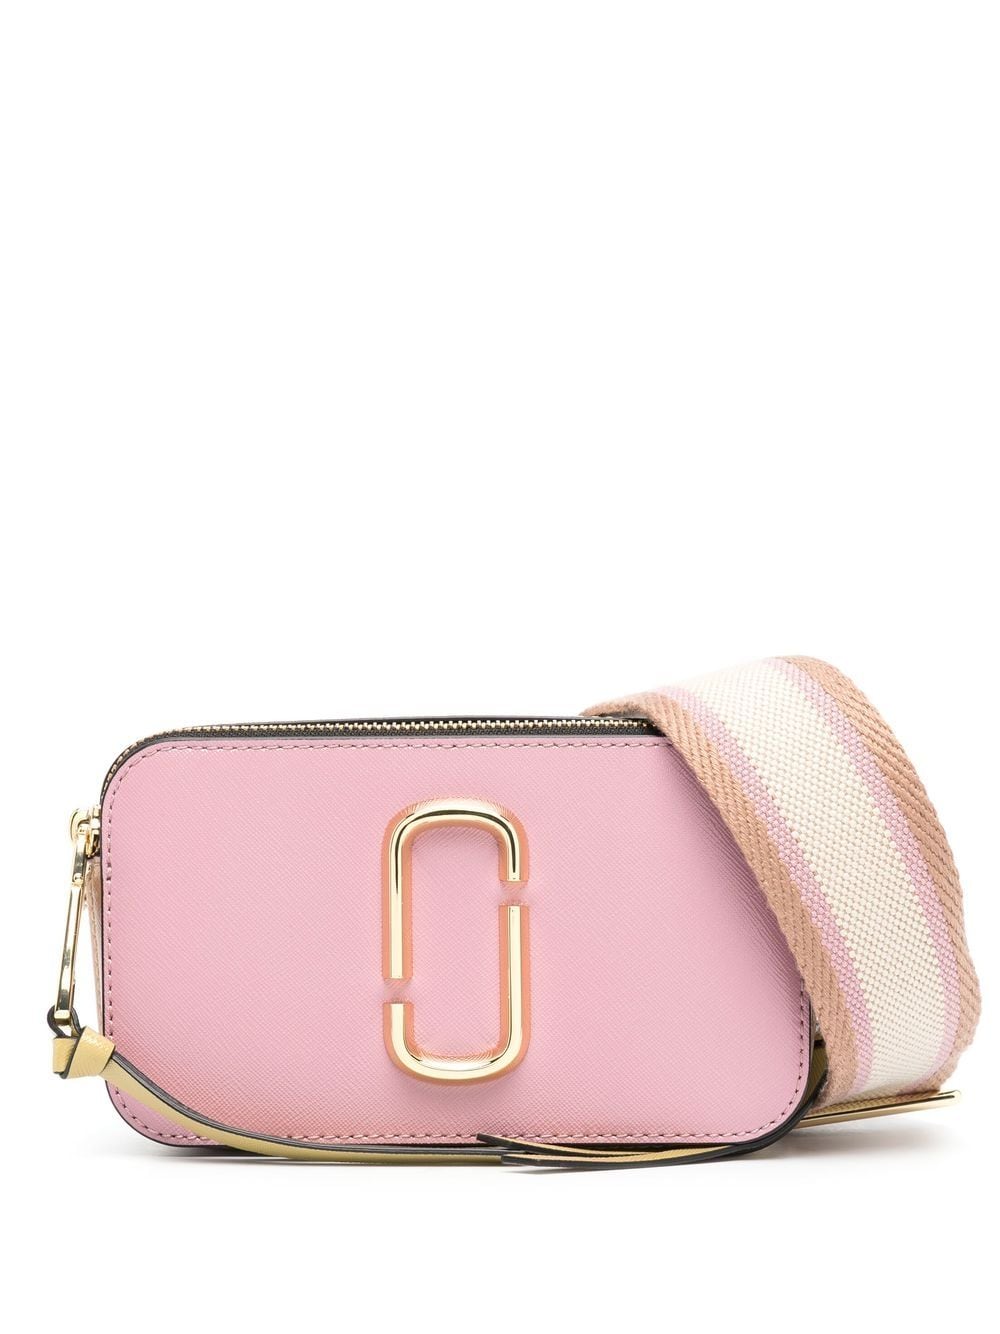 Marc Jacobs Yellow And Pink Small Snapshot Bag